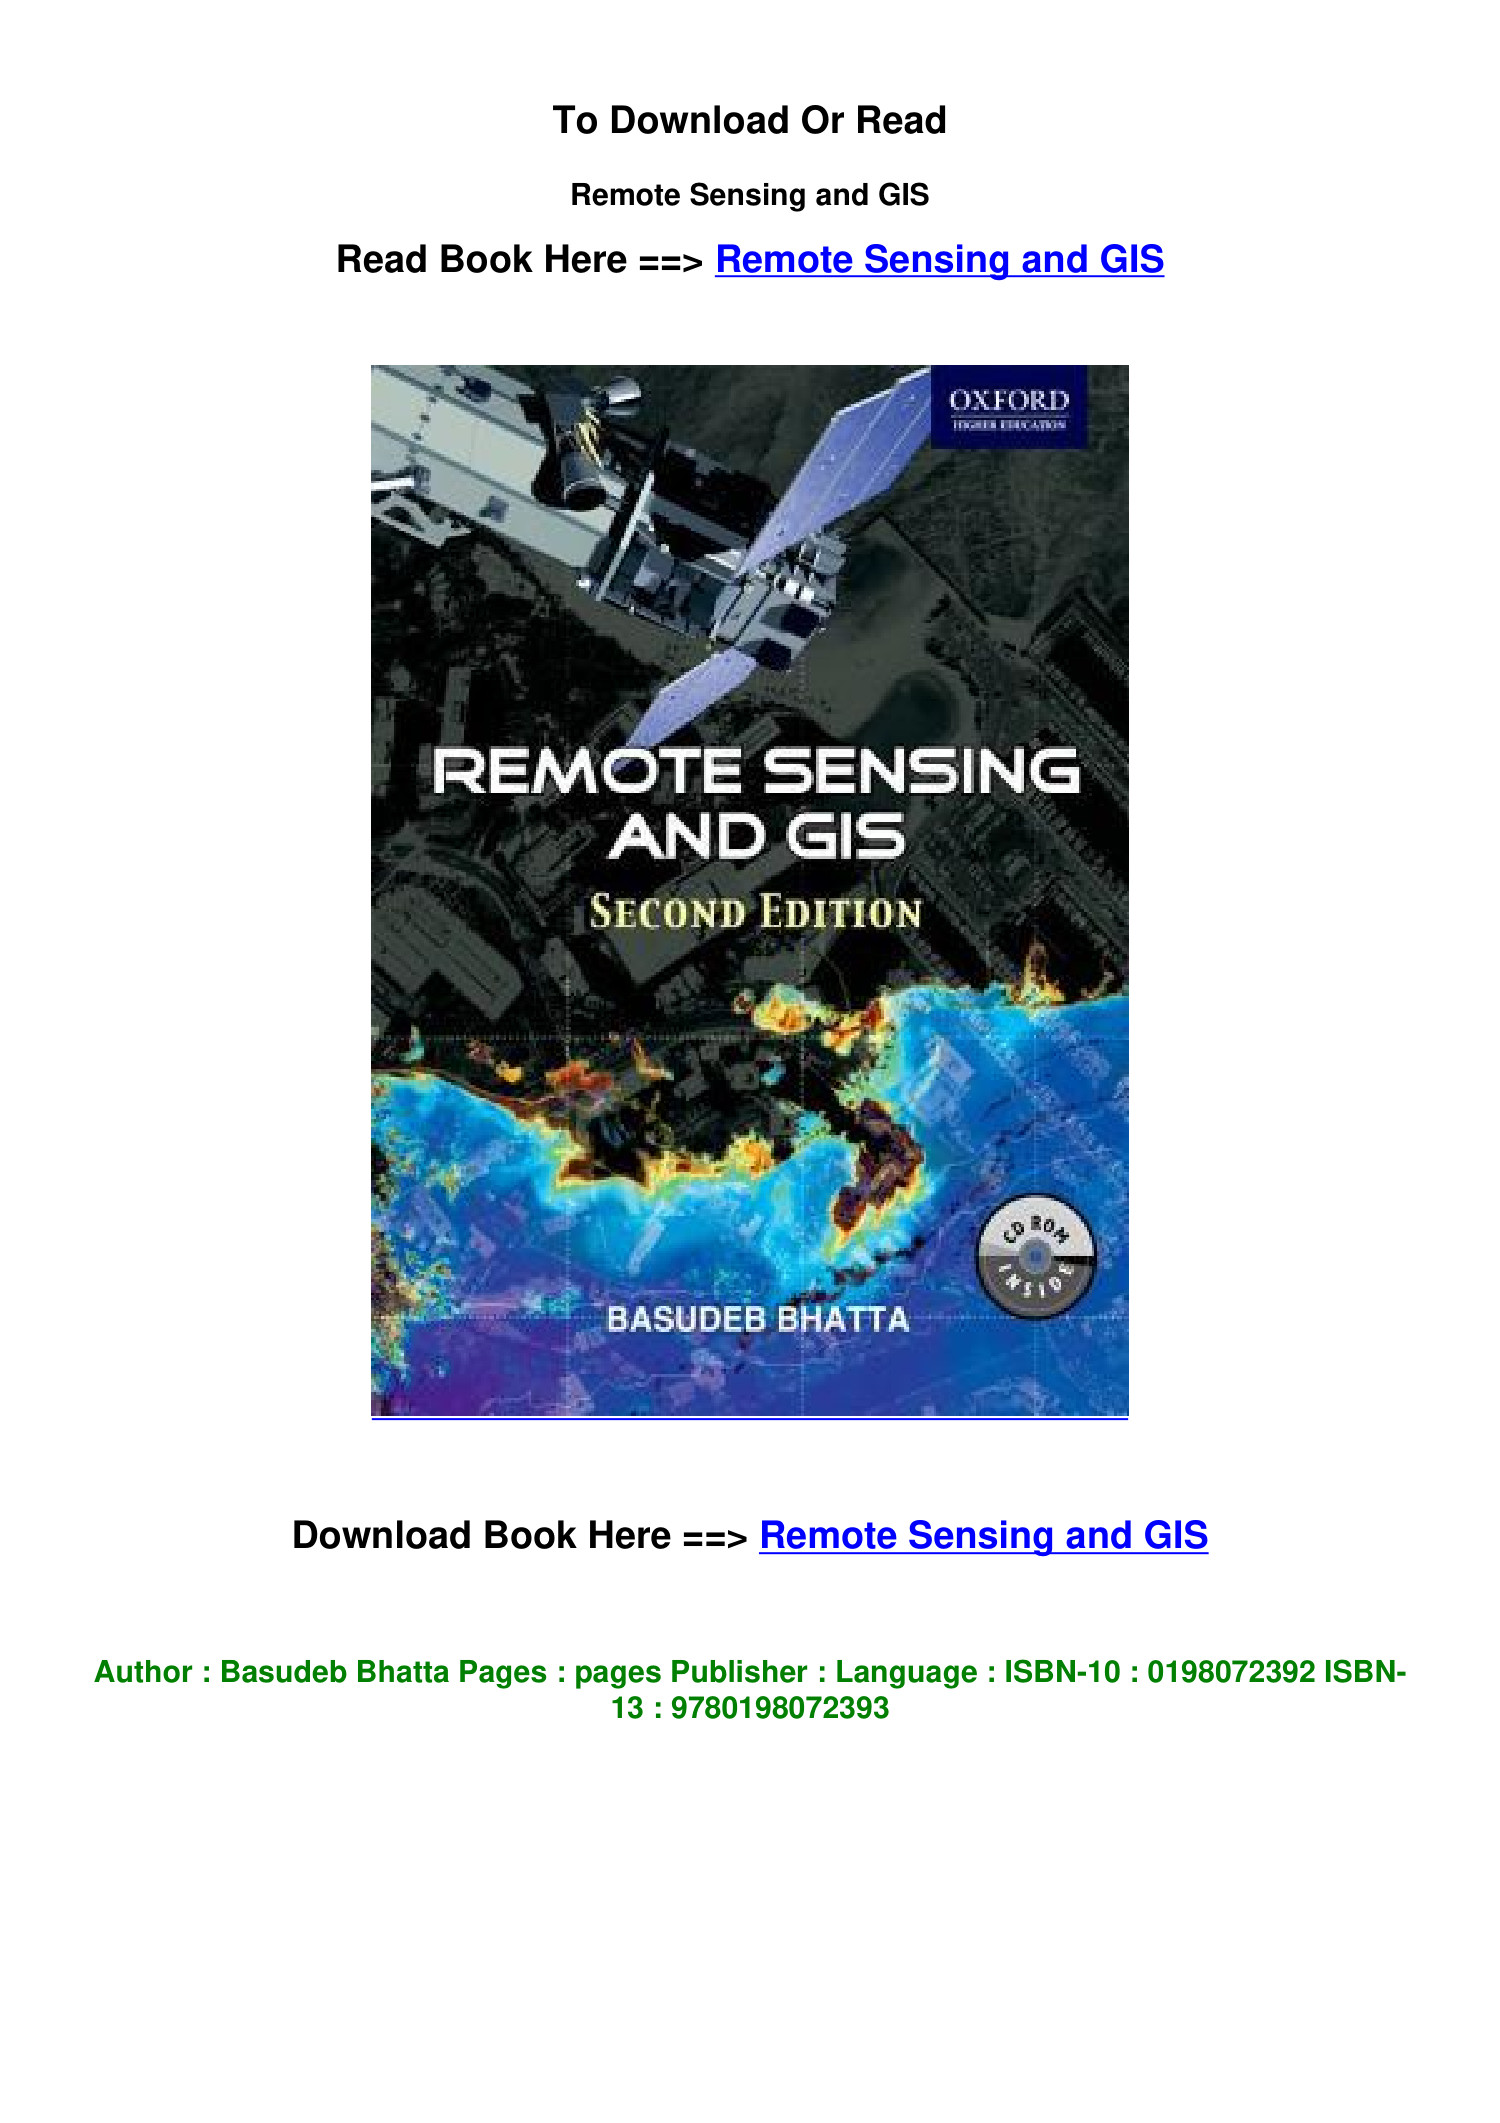 pdf download Remote Sensing and GIS By Basudeb Bhatta.pdf